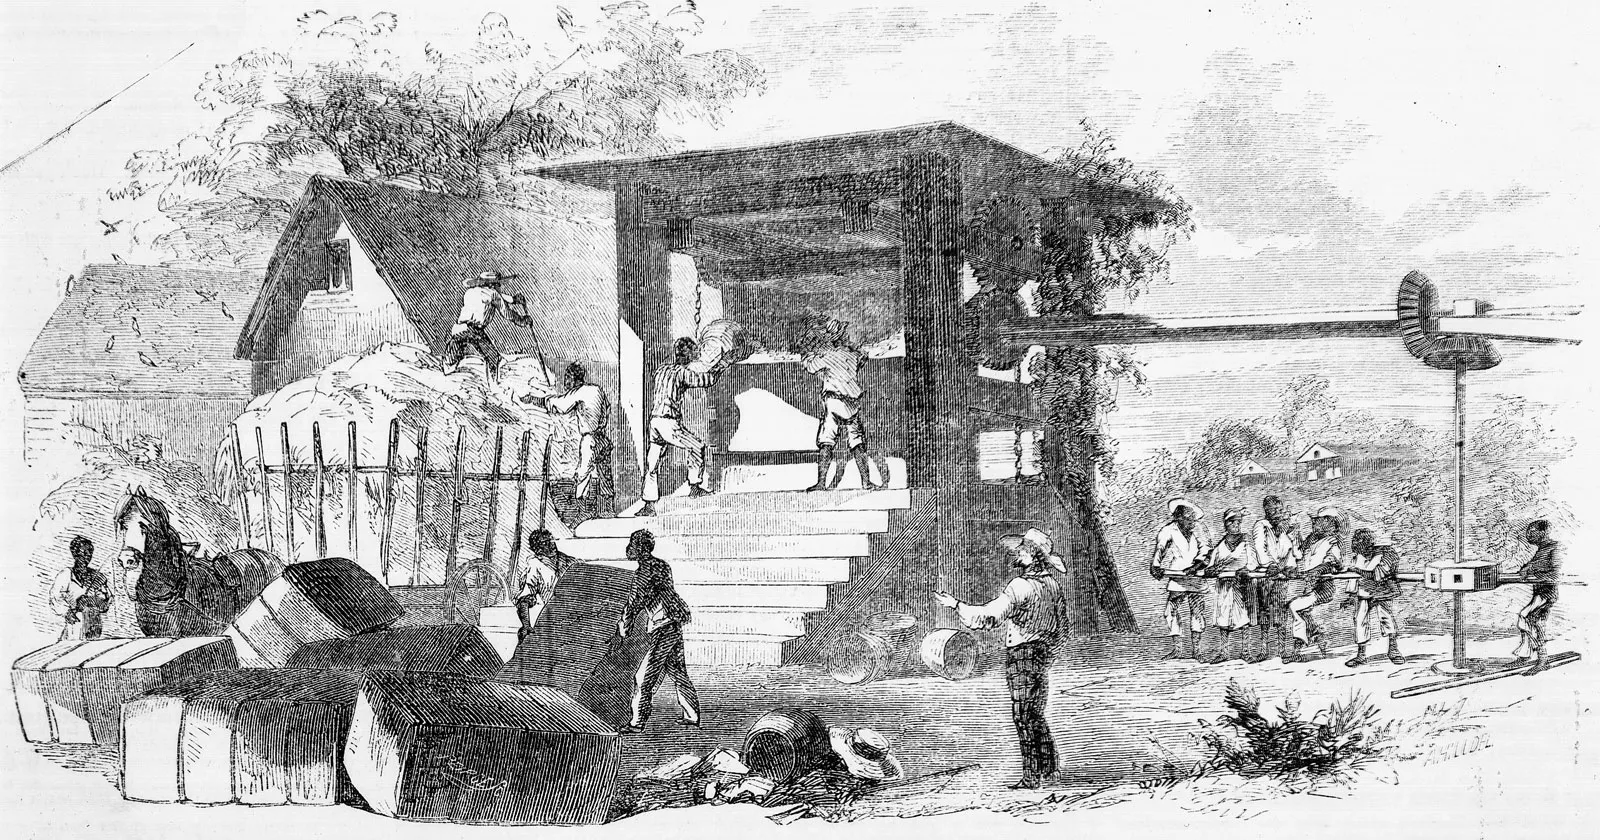 William J. Pierce and A. Hill, "Cotton Pressing in Louisiana," Ballou's Pictorial Drawing-Room Companion, no. 15, April 12, 1856, p. 236.